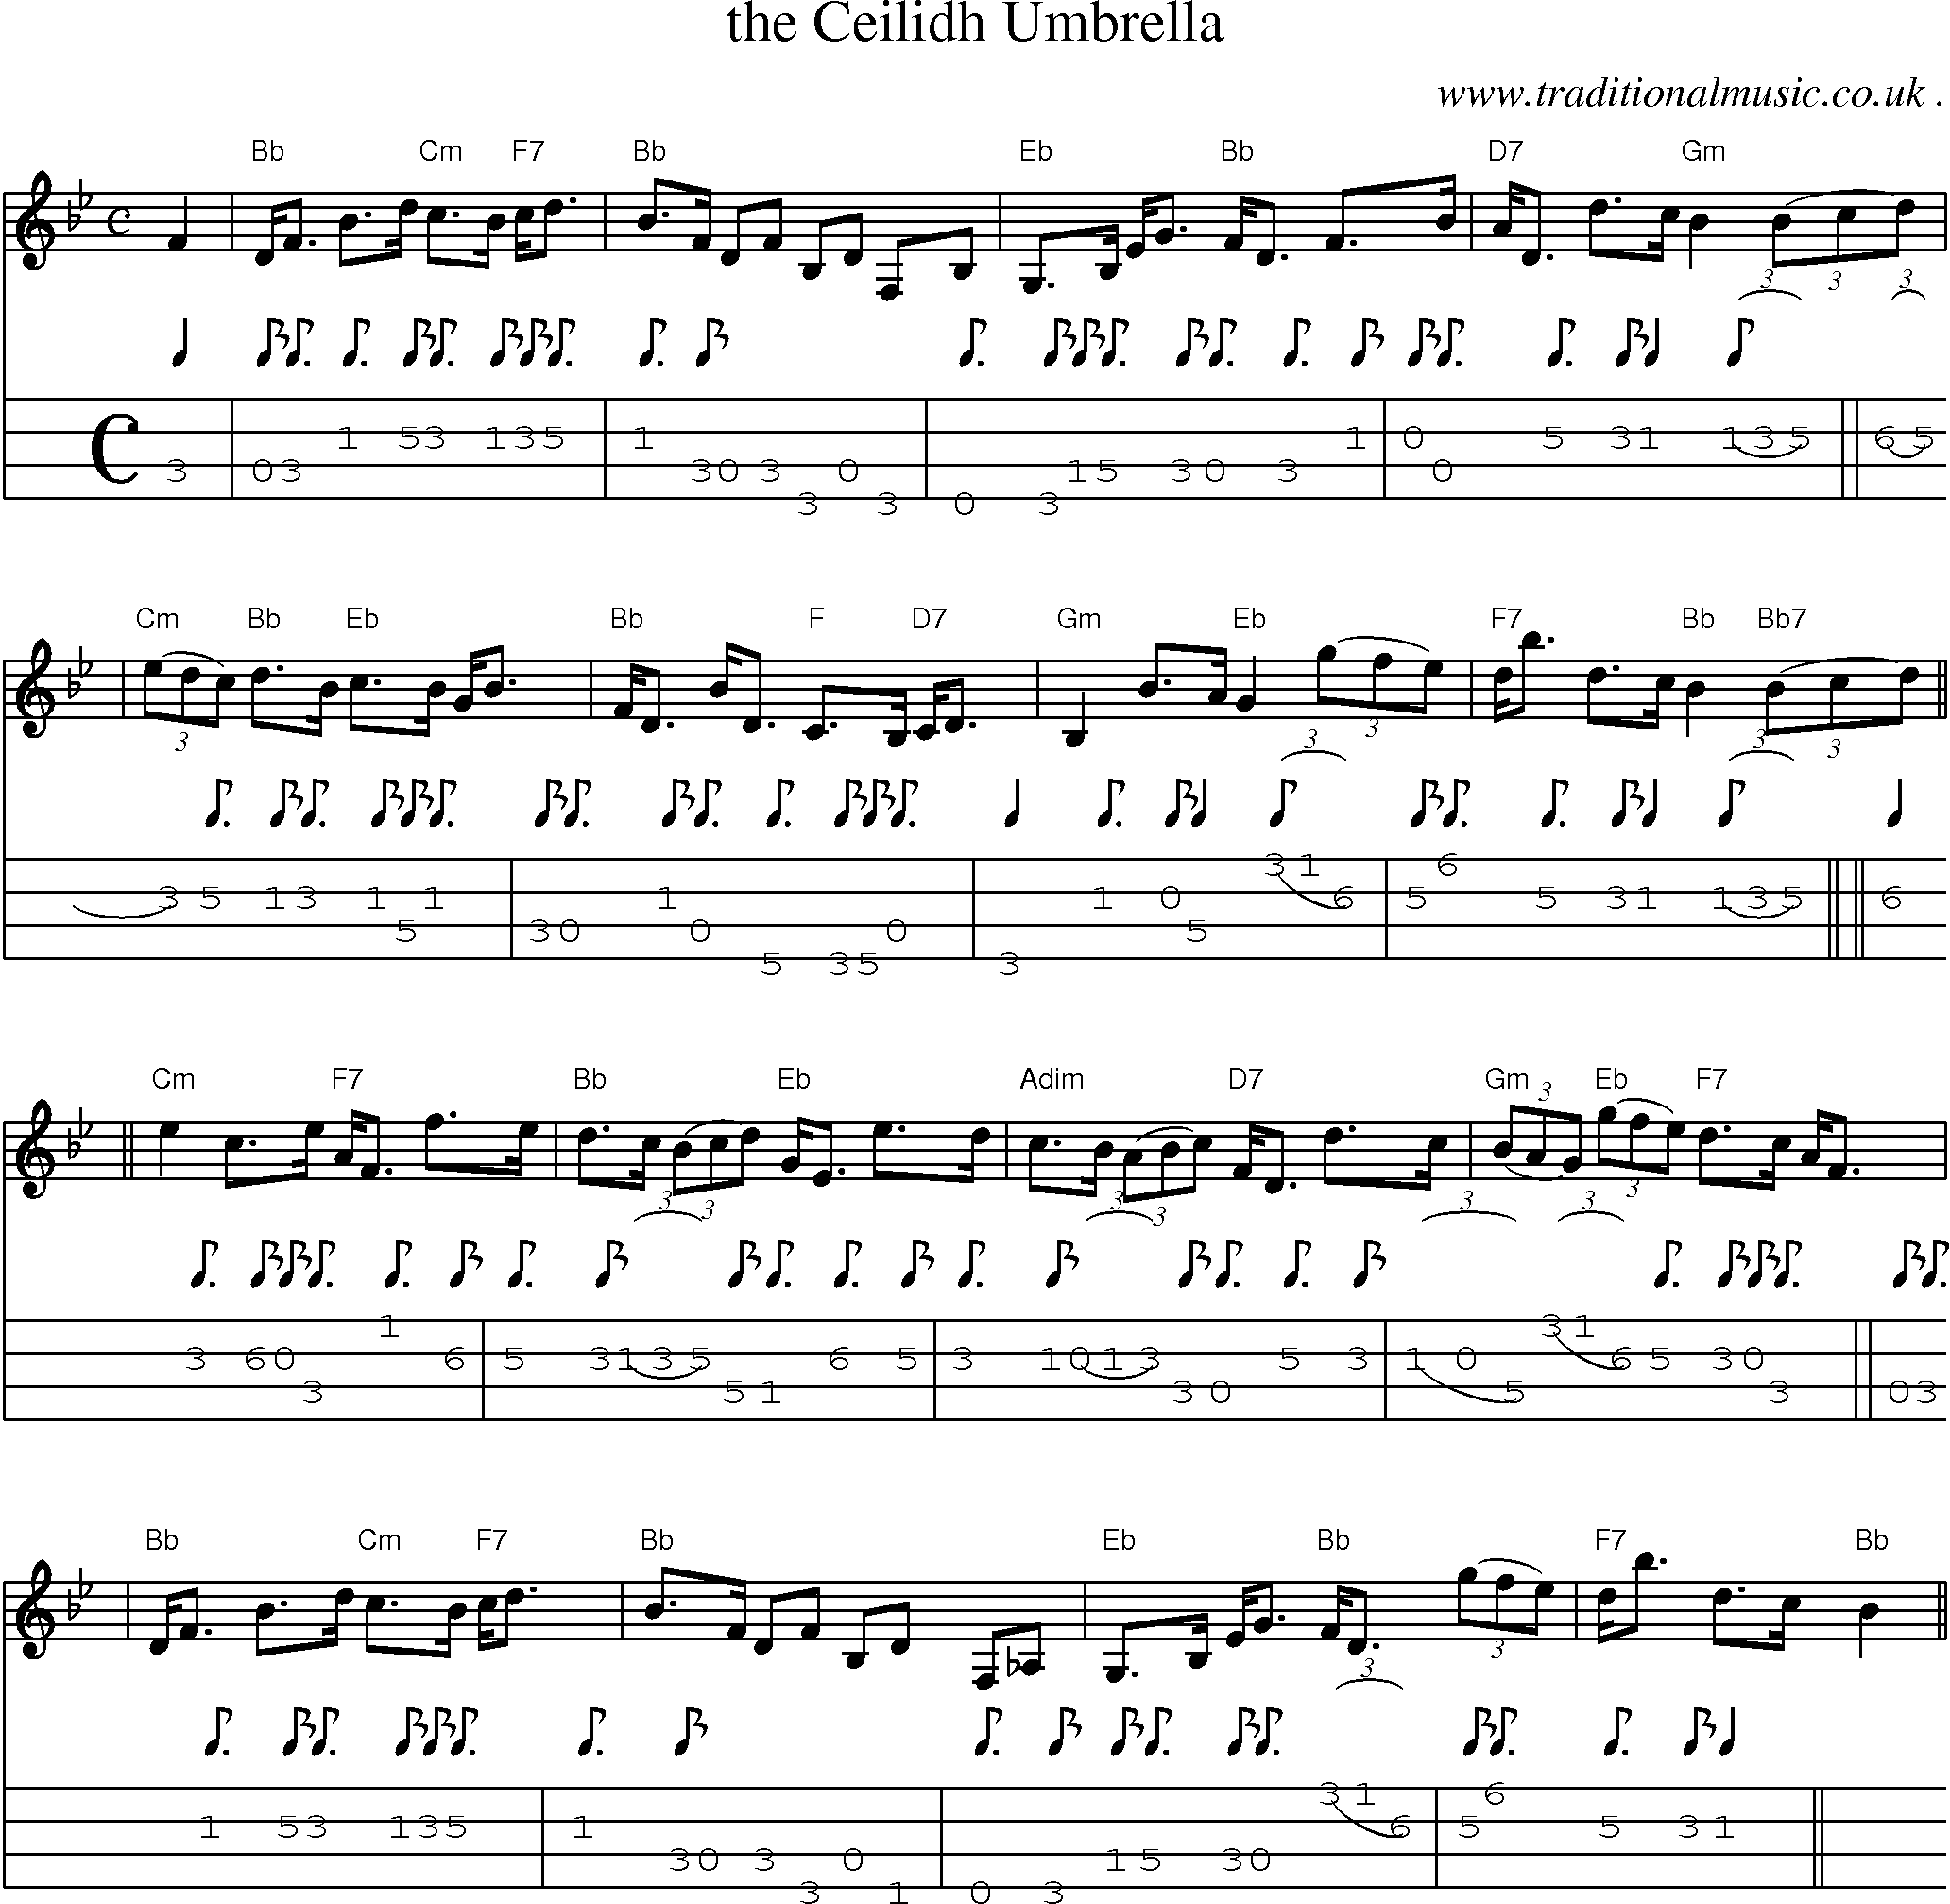 Music Score and Mandolin Tabs for The Ceilidh Umbrella